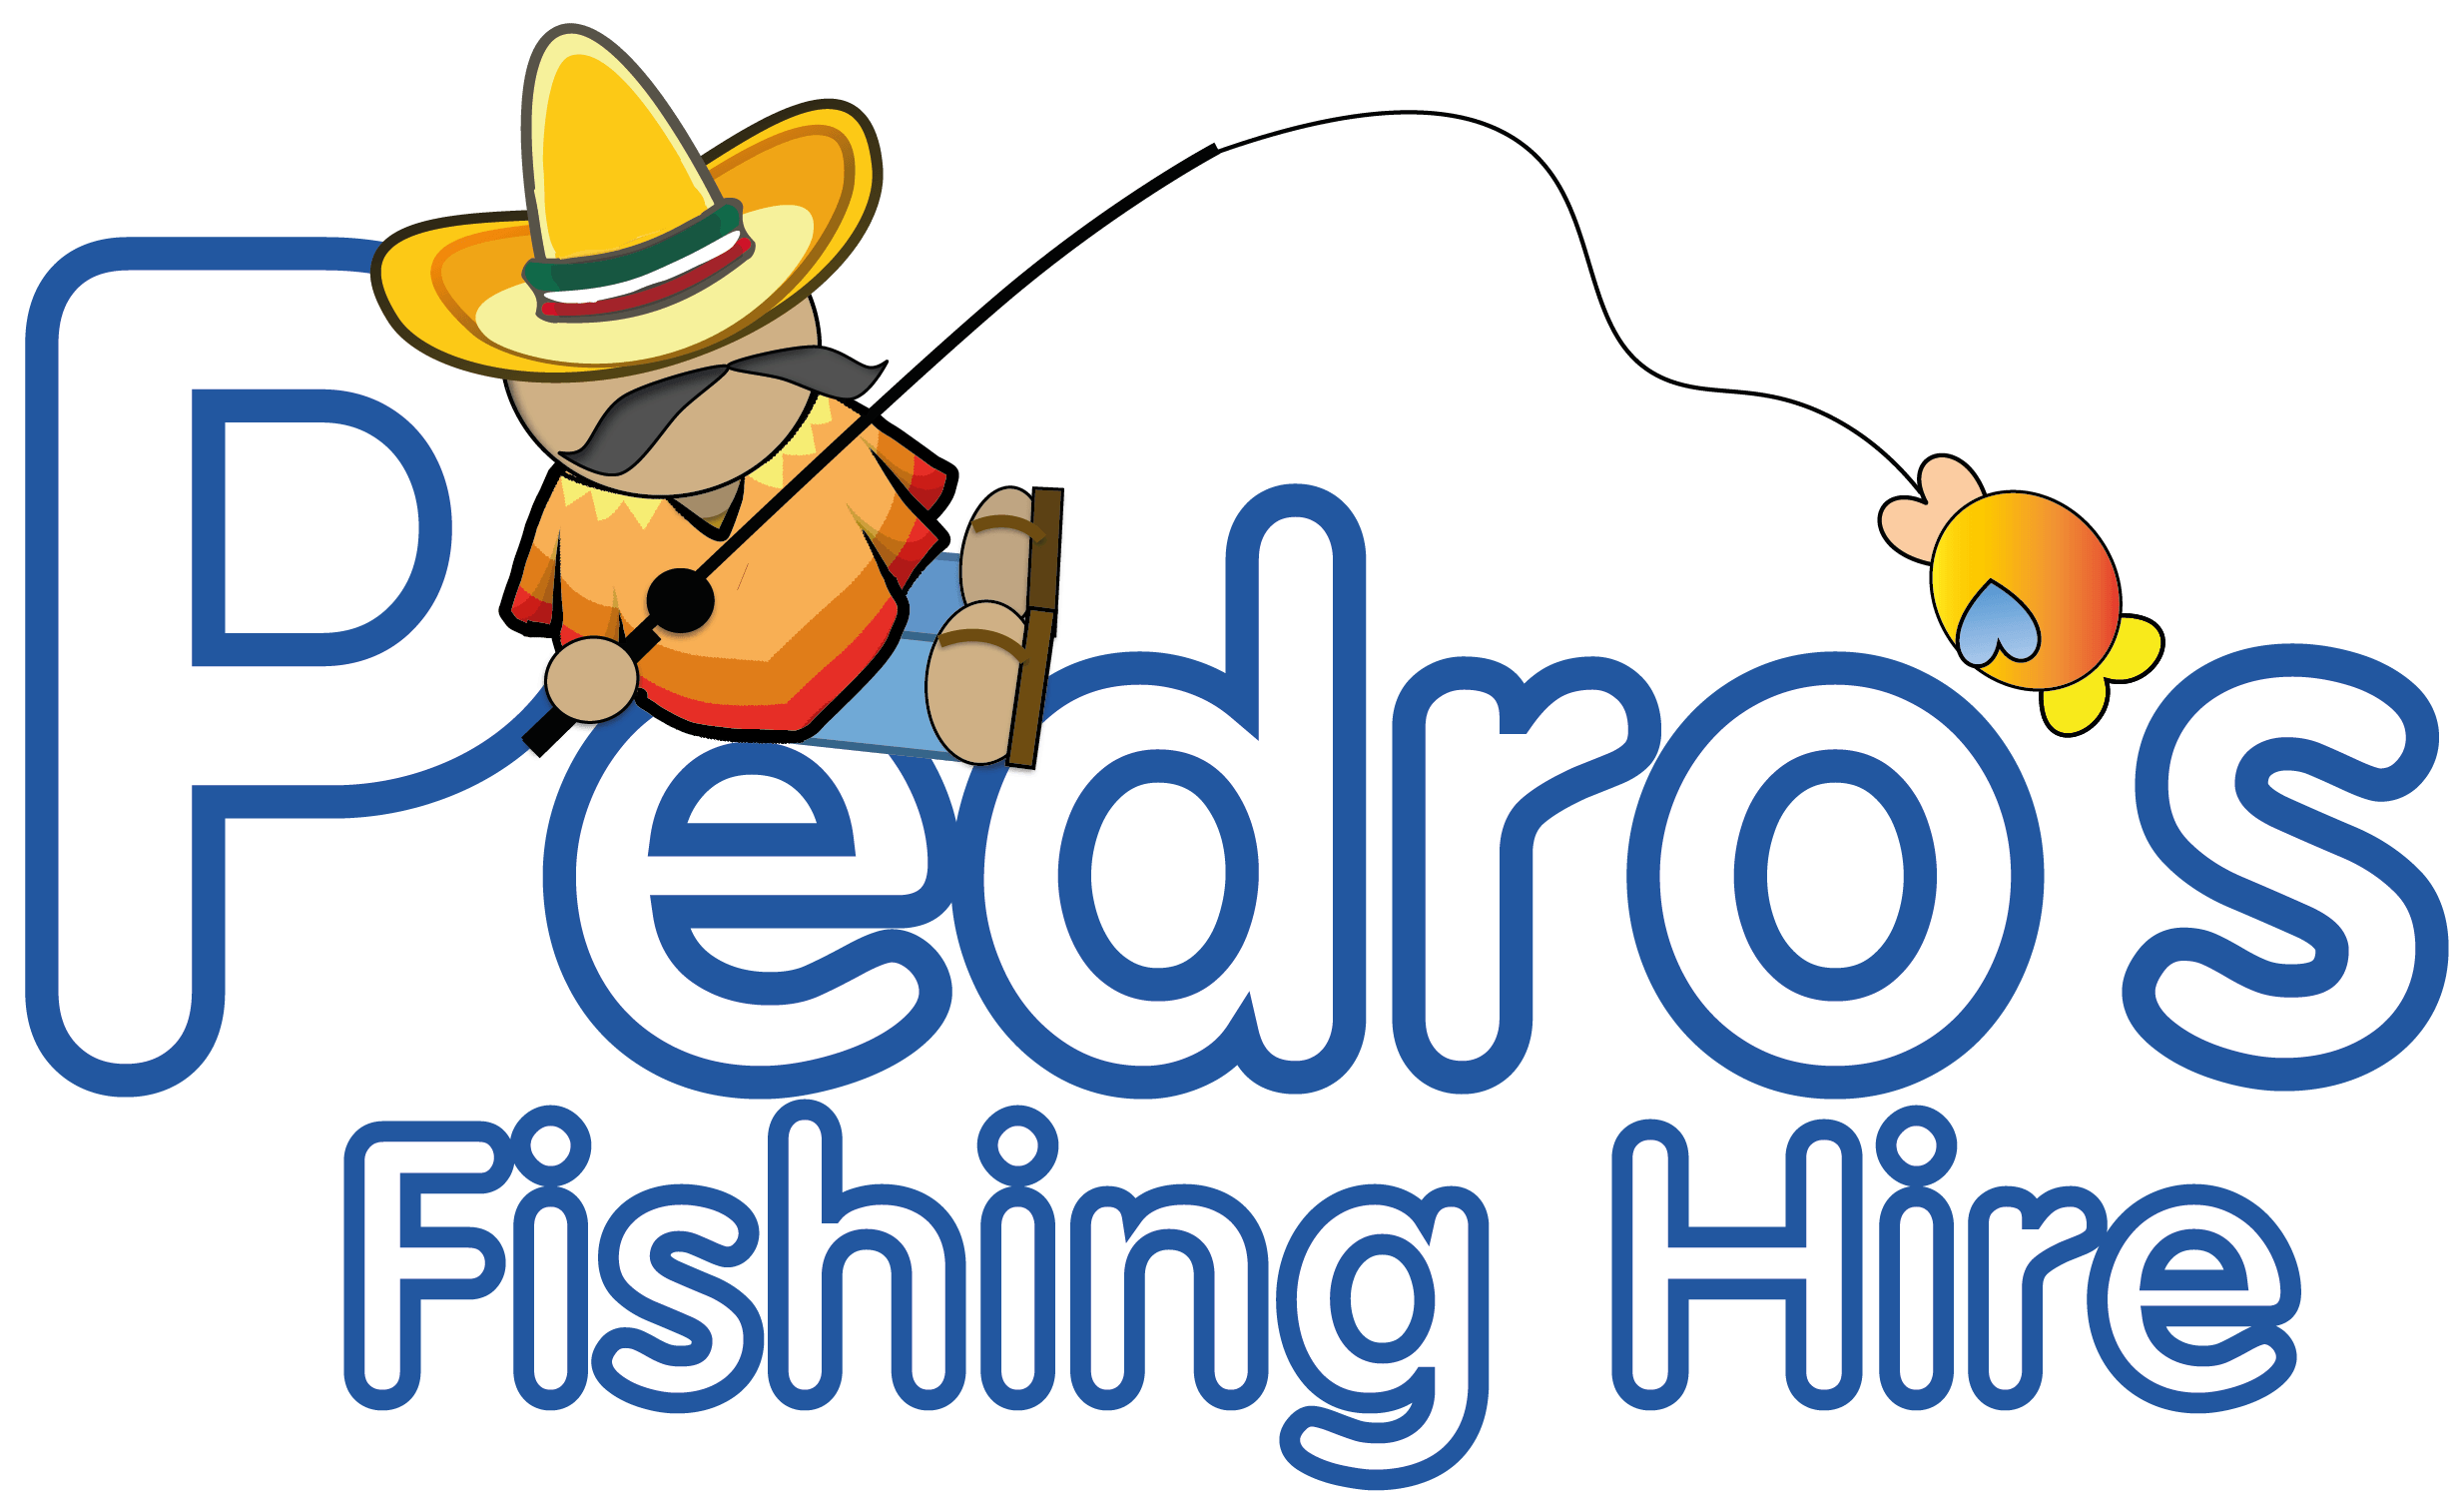 Pedro's Fishing Gear Hire